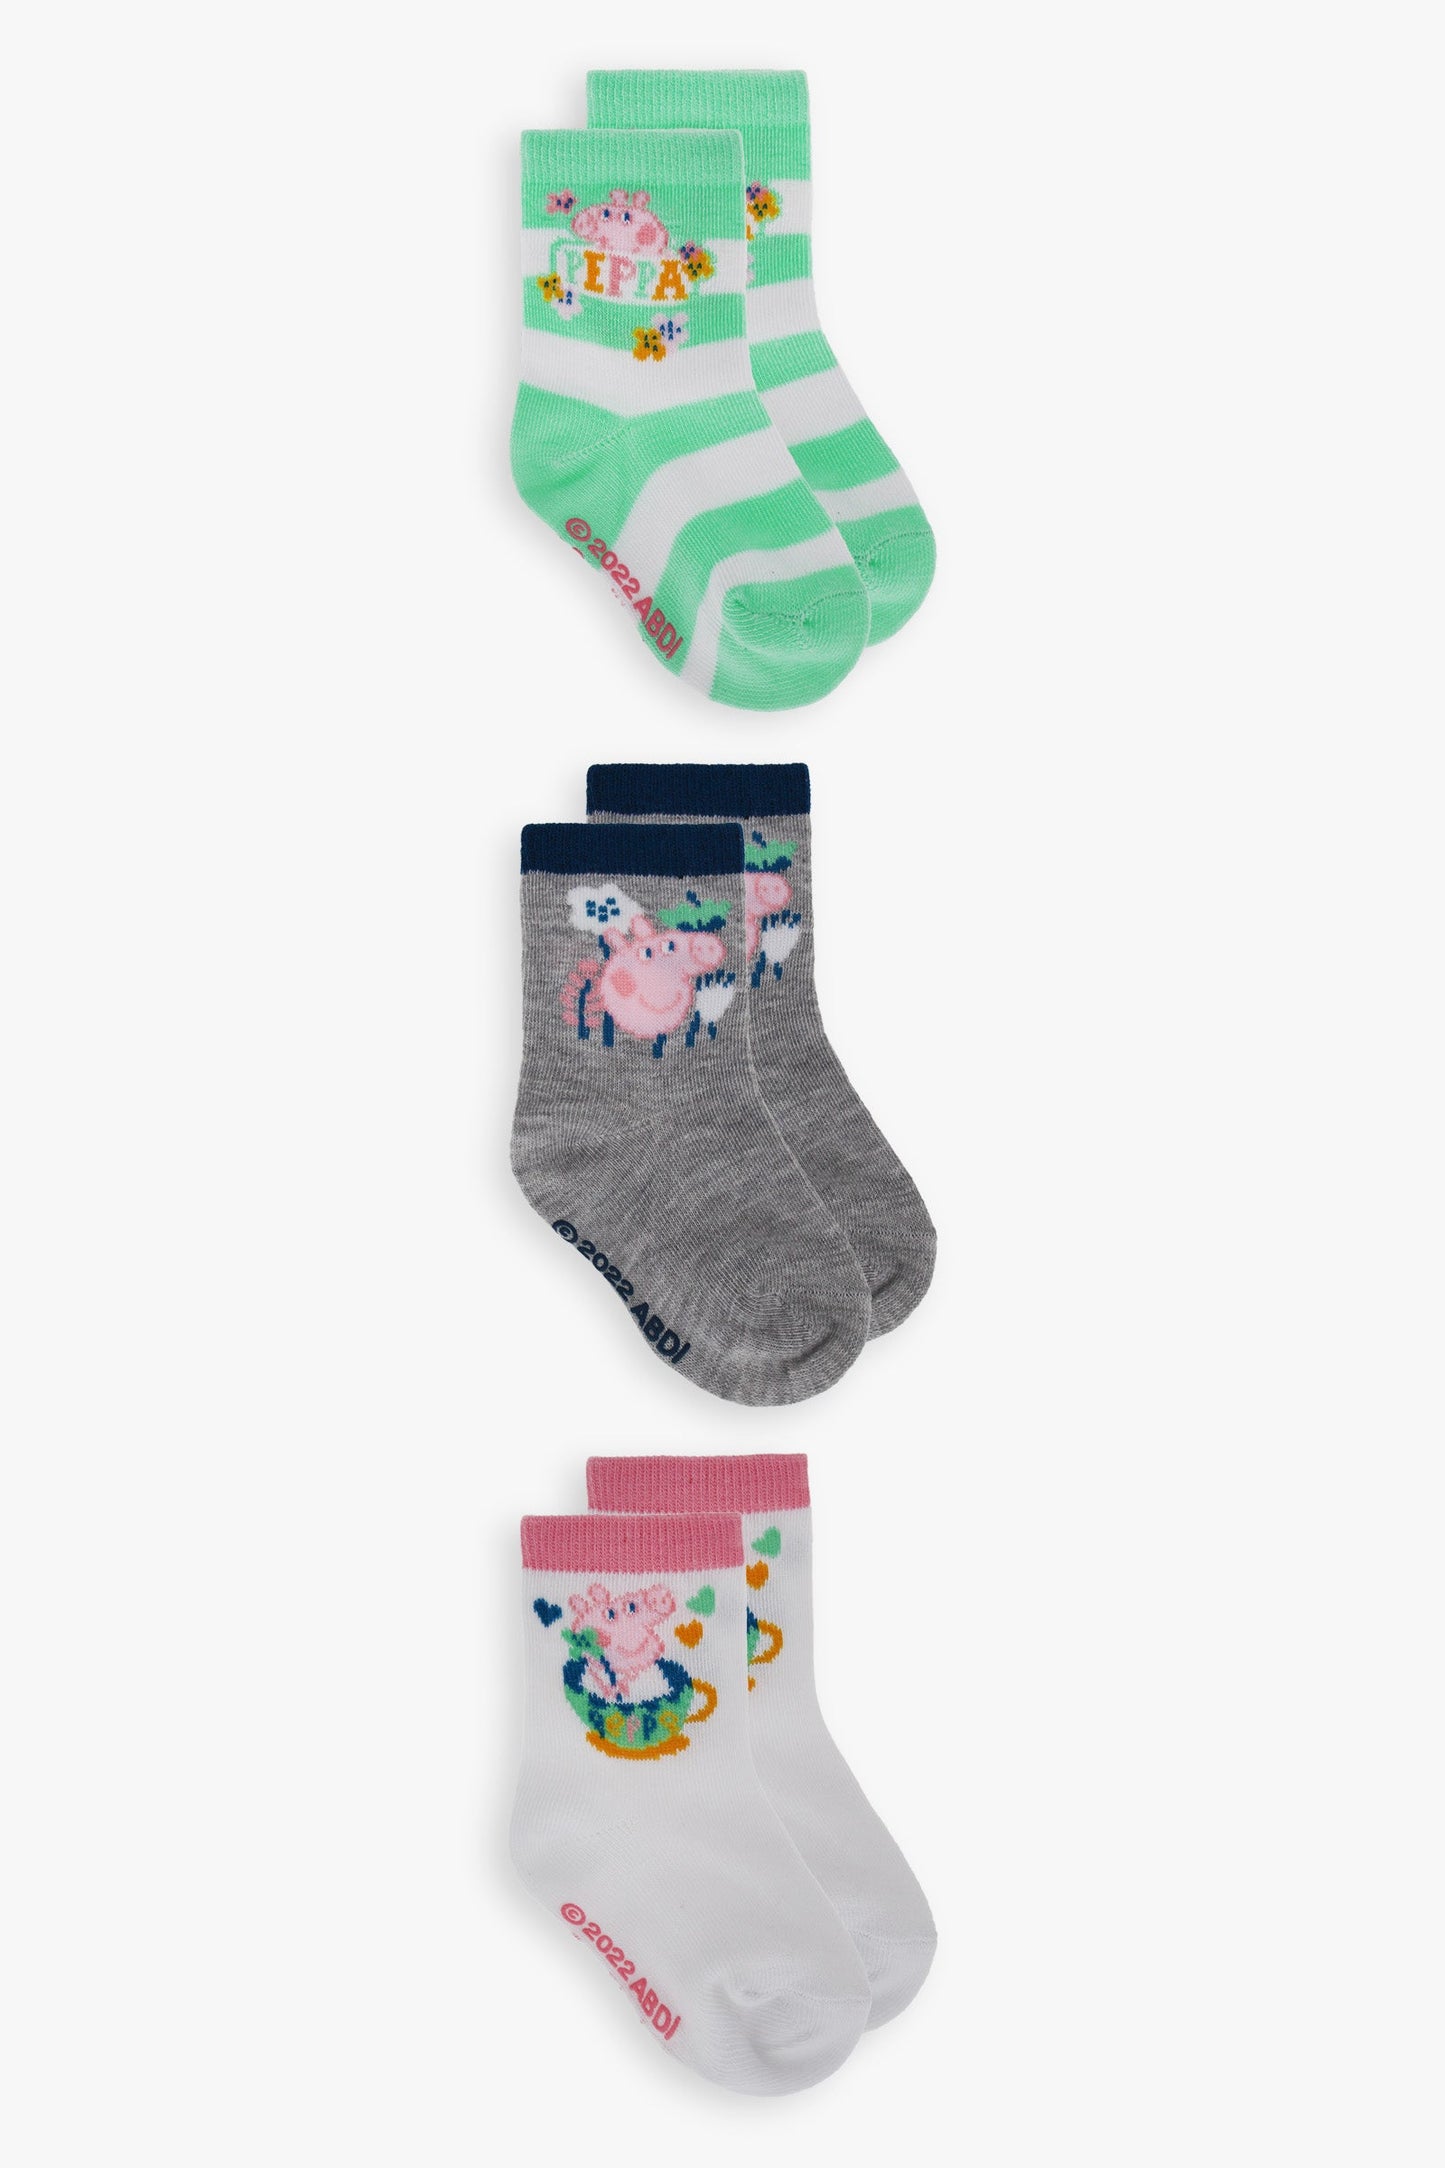 Peppa Pig Infant 3-Pack Crew Socks | Size 12-24 Months